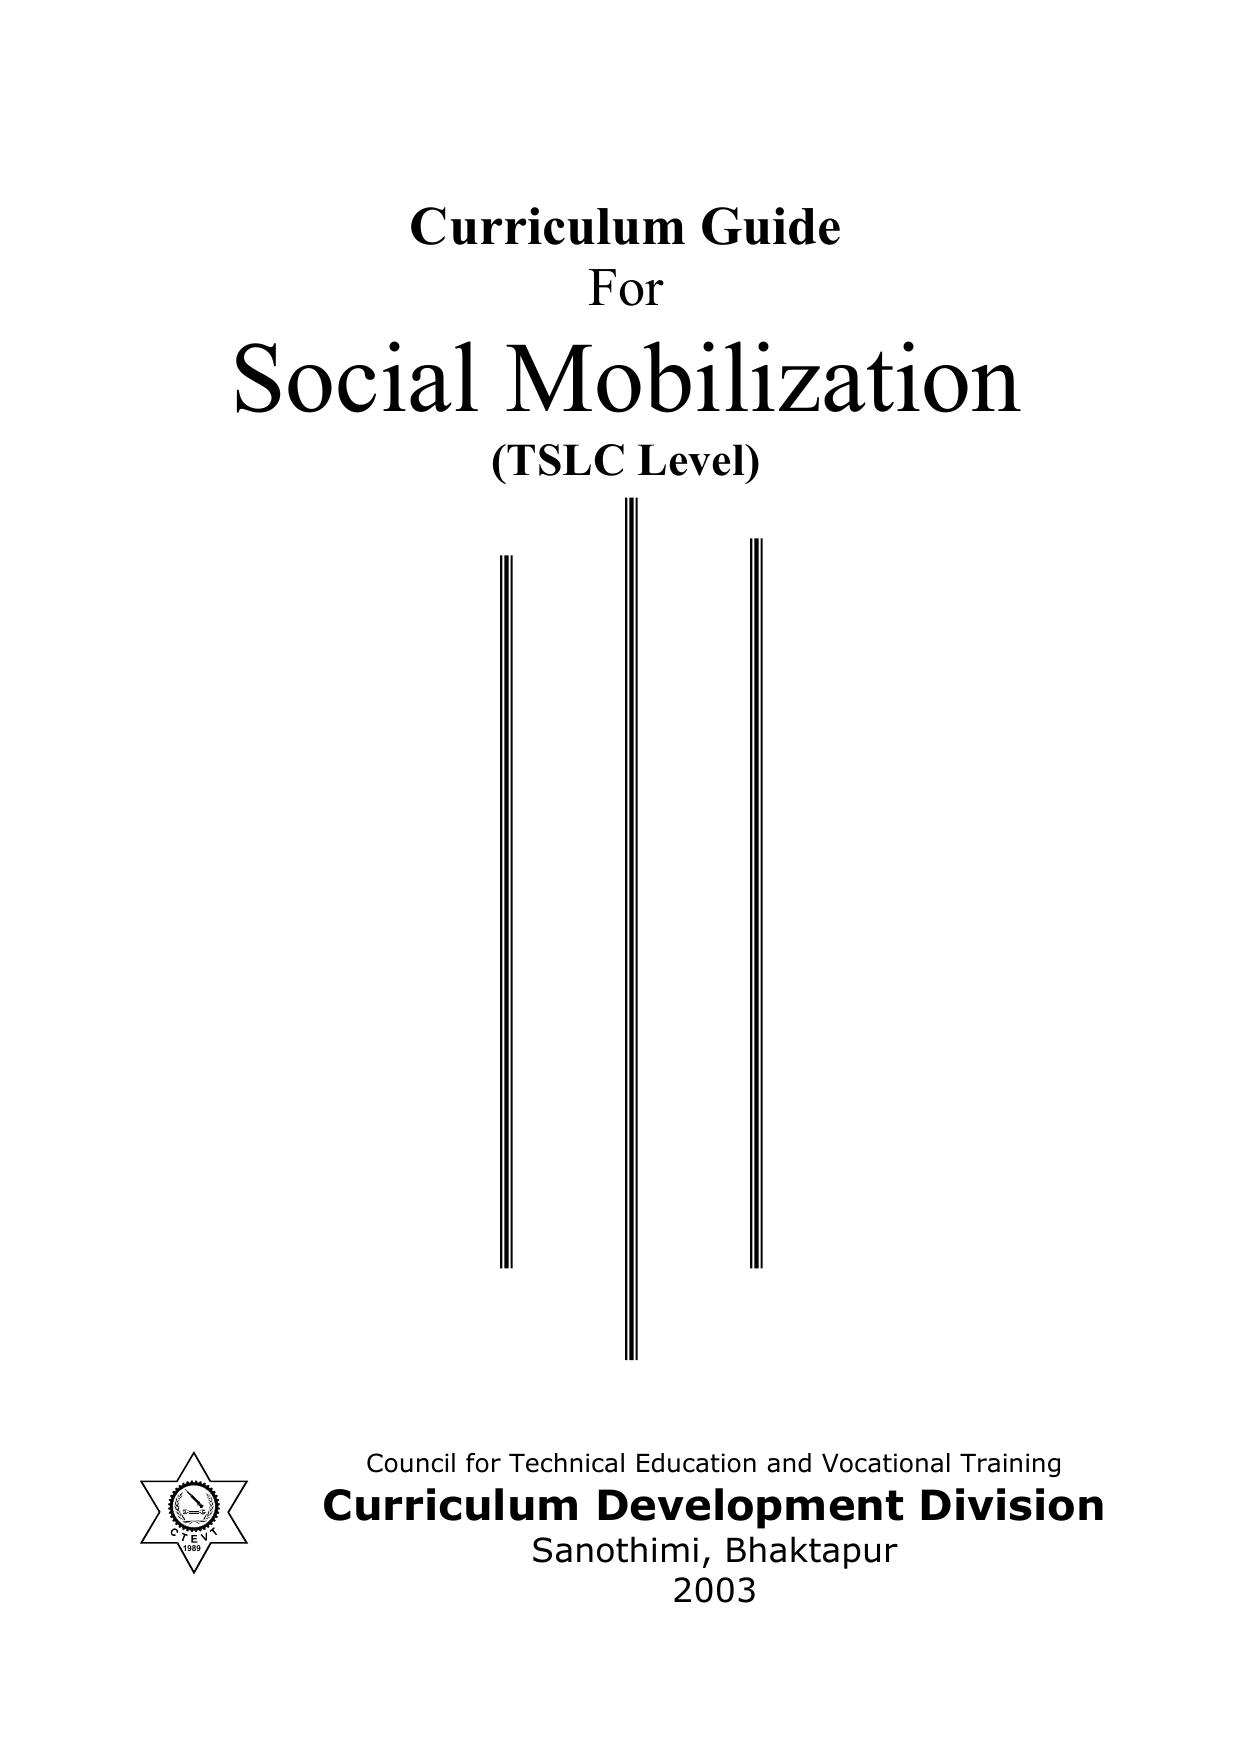 TSLC in Social Mobilization, 2003